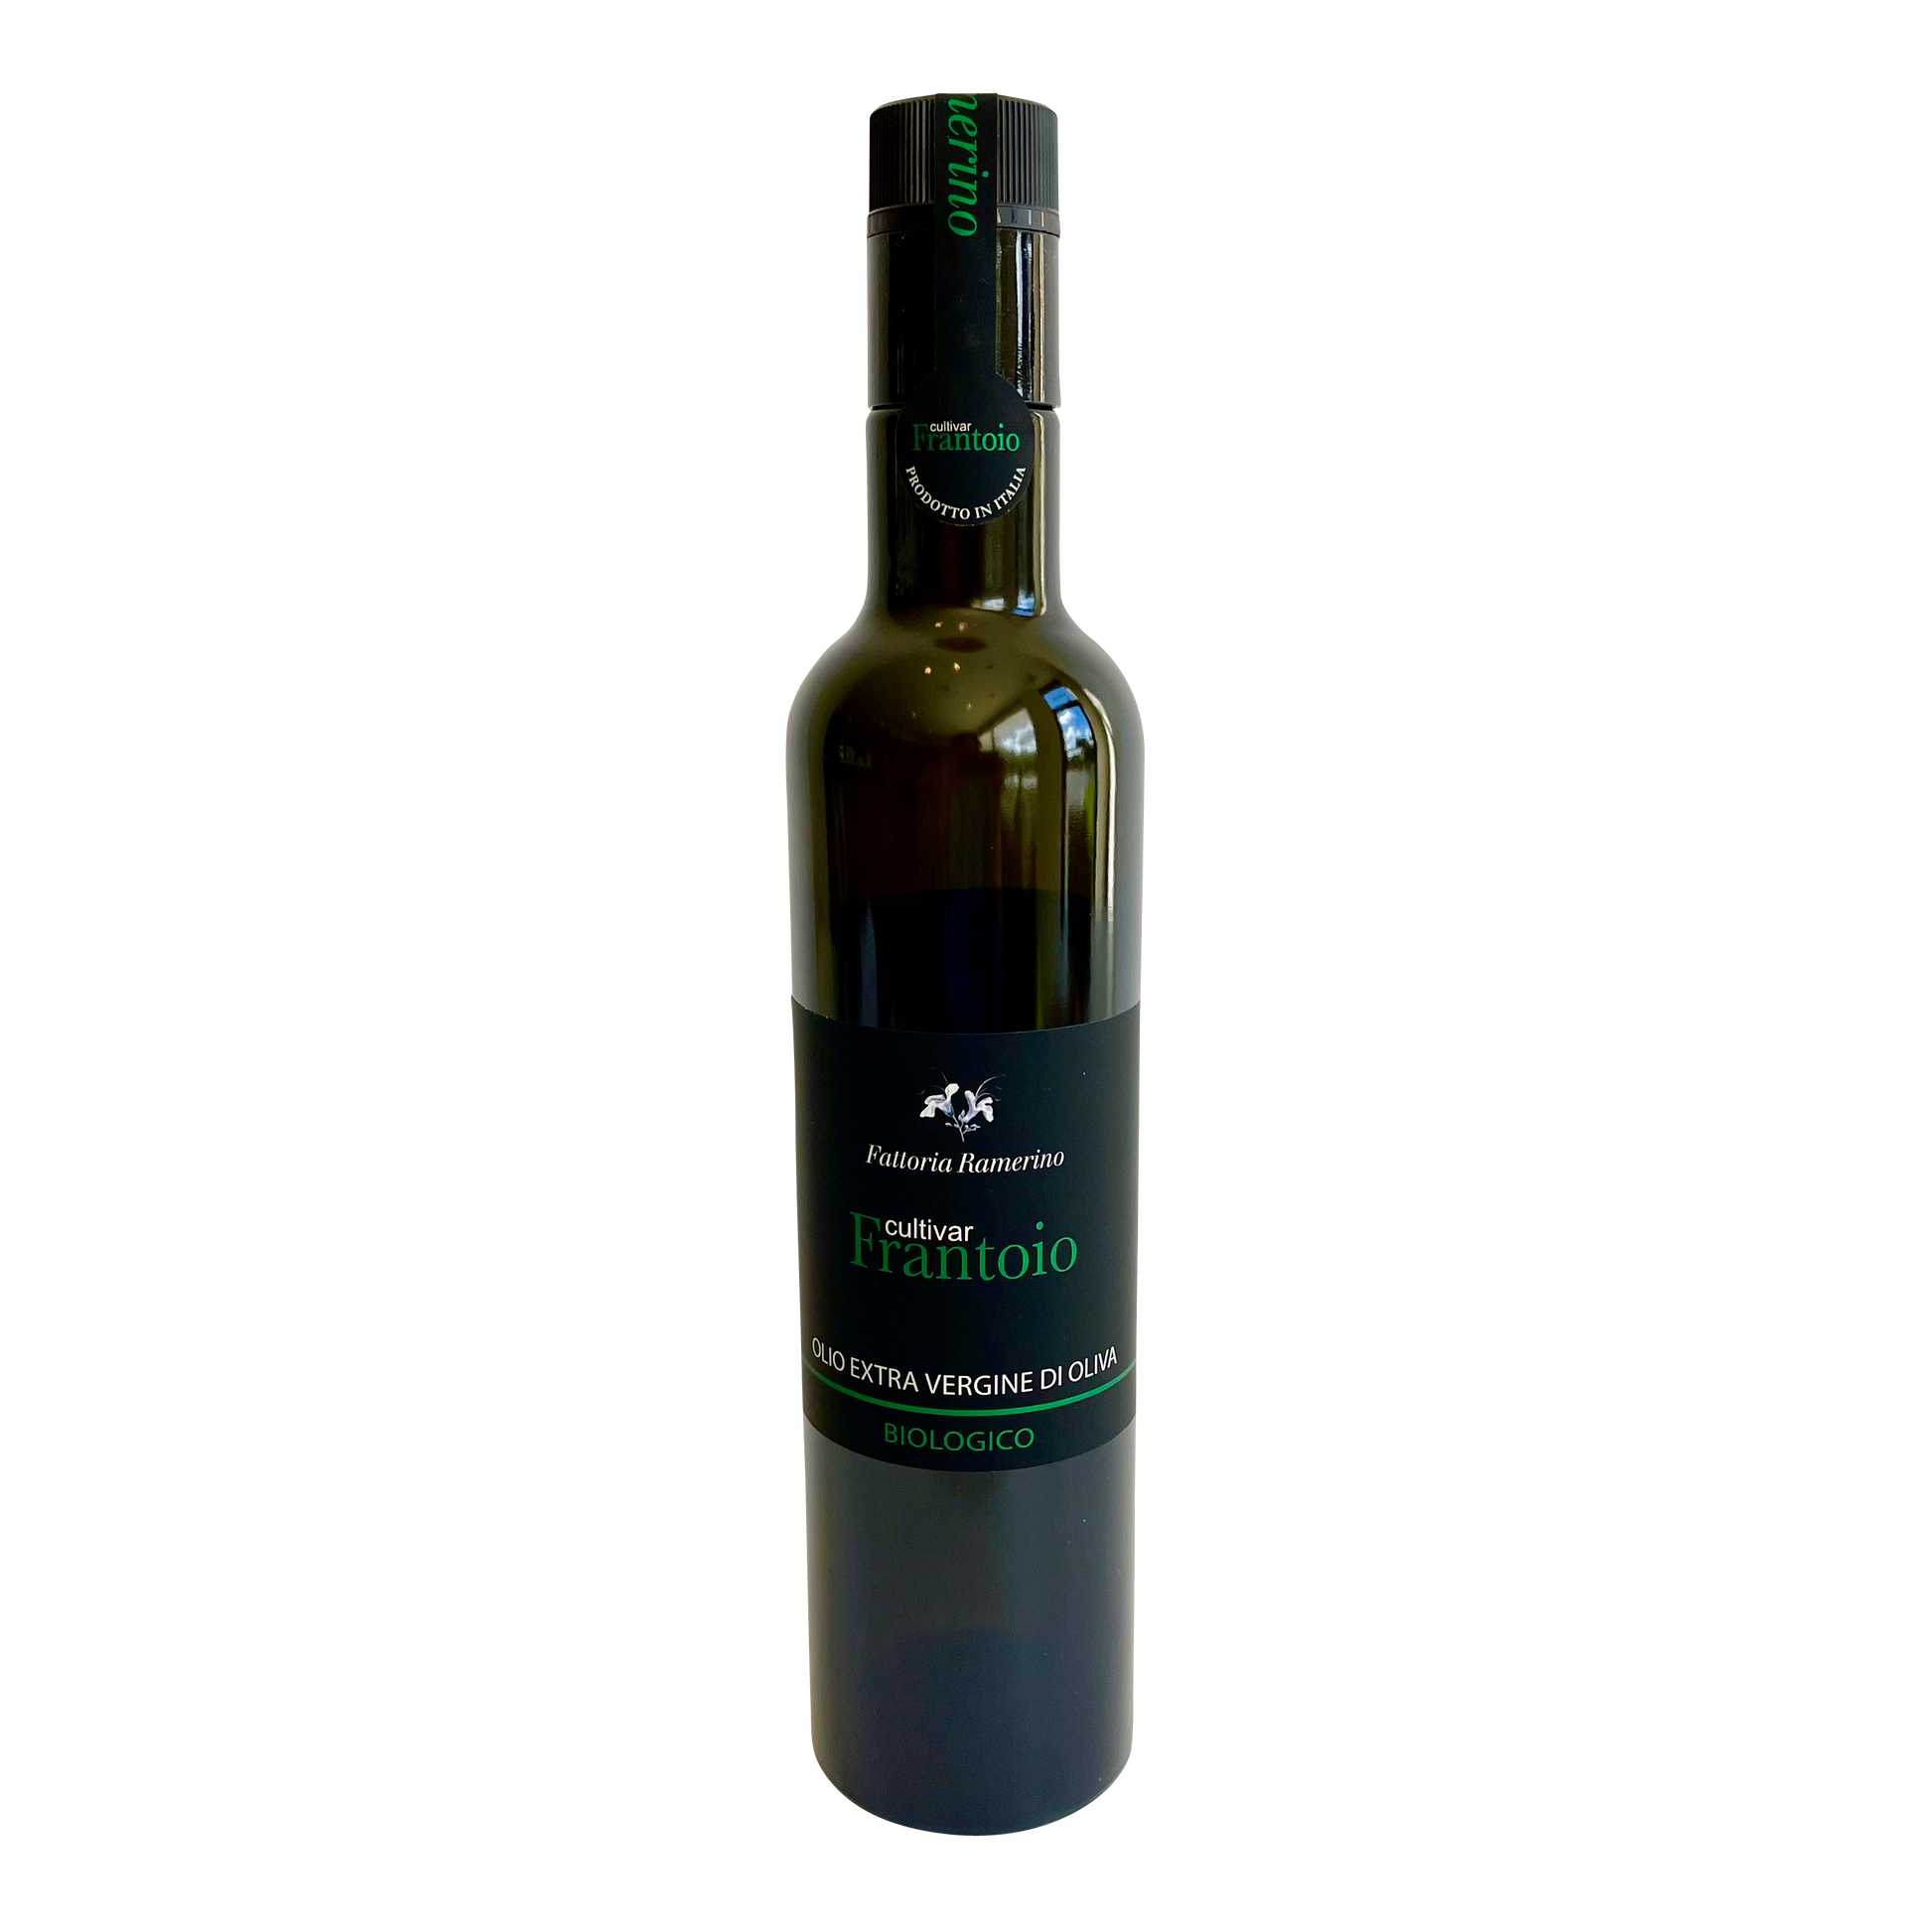 Fattoria Ramerino "Cultivar Frantoio" Extra Virgin Olive Oil RAM-039